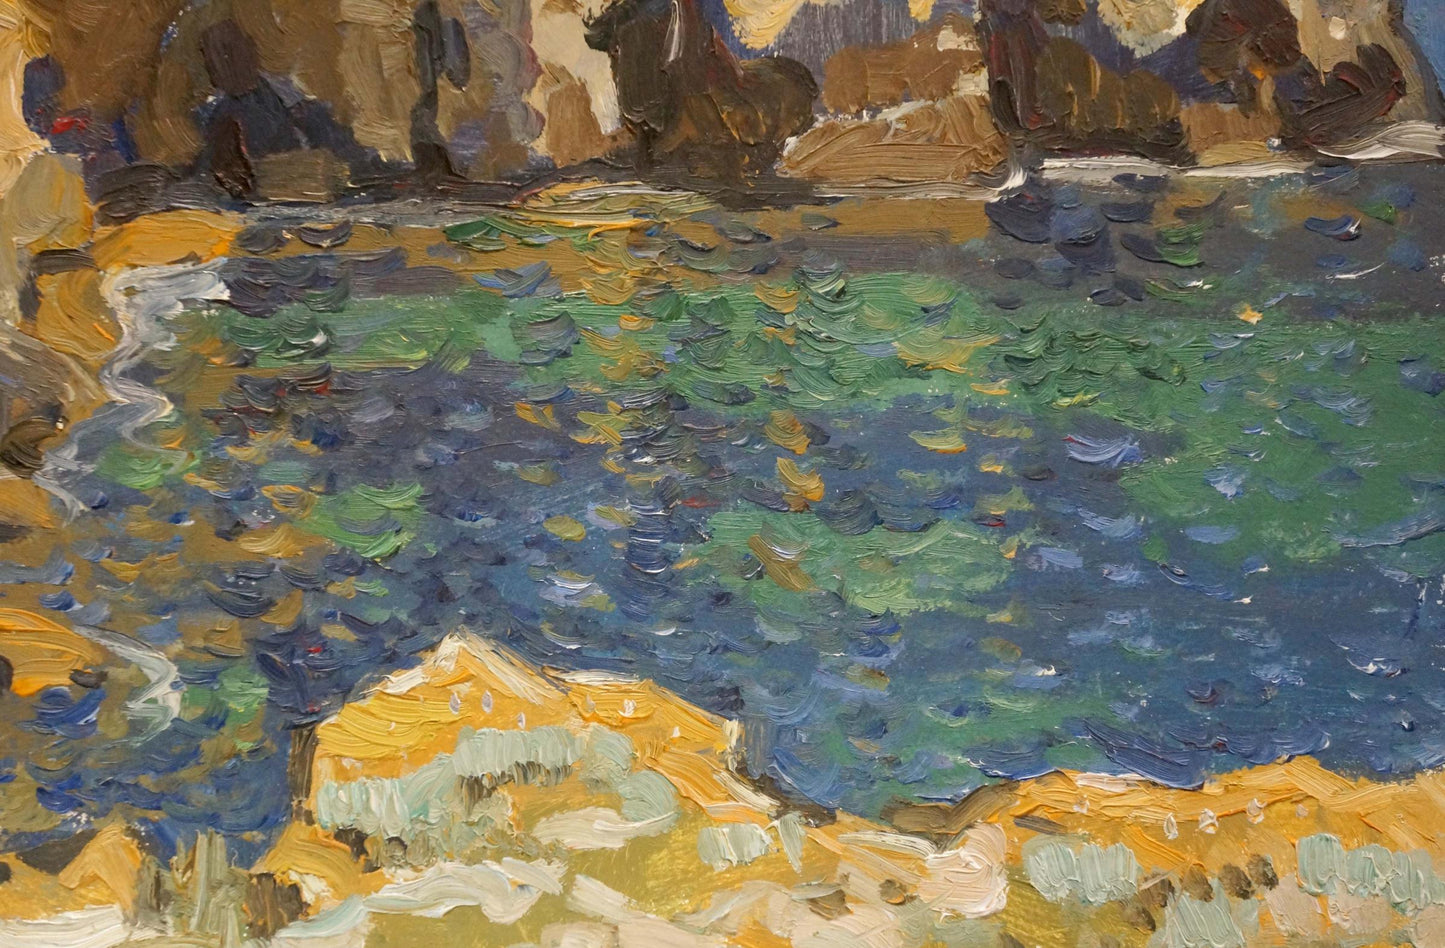 Yuri Alexandrovich Konovalov's oil piece depicts the scenery near a cliff